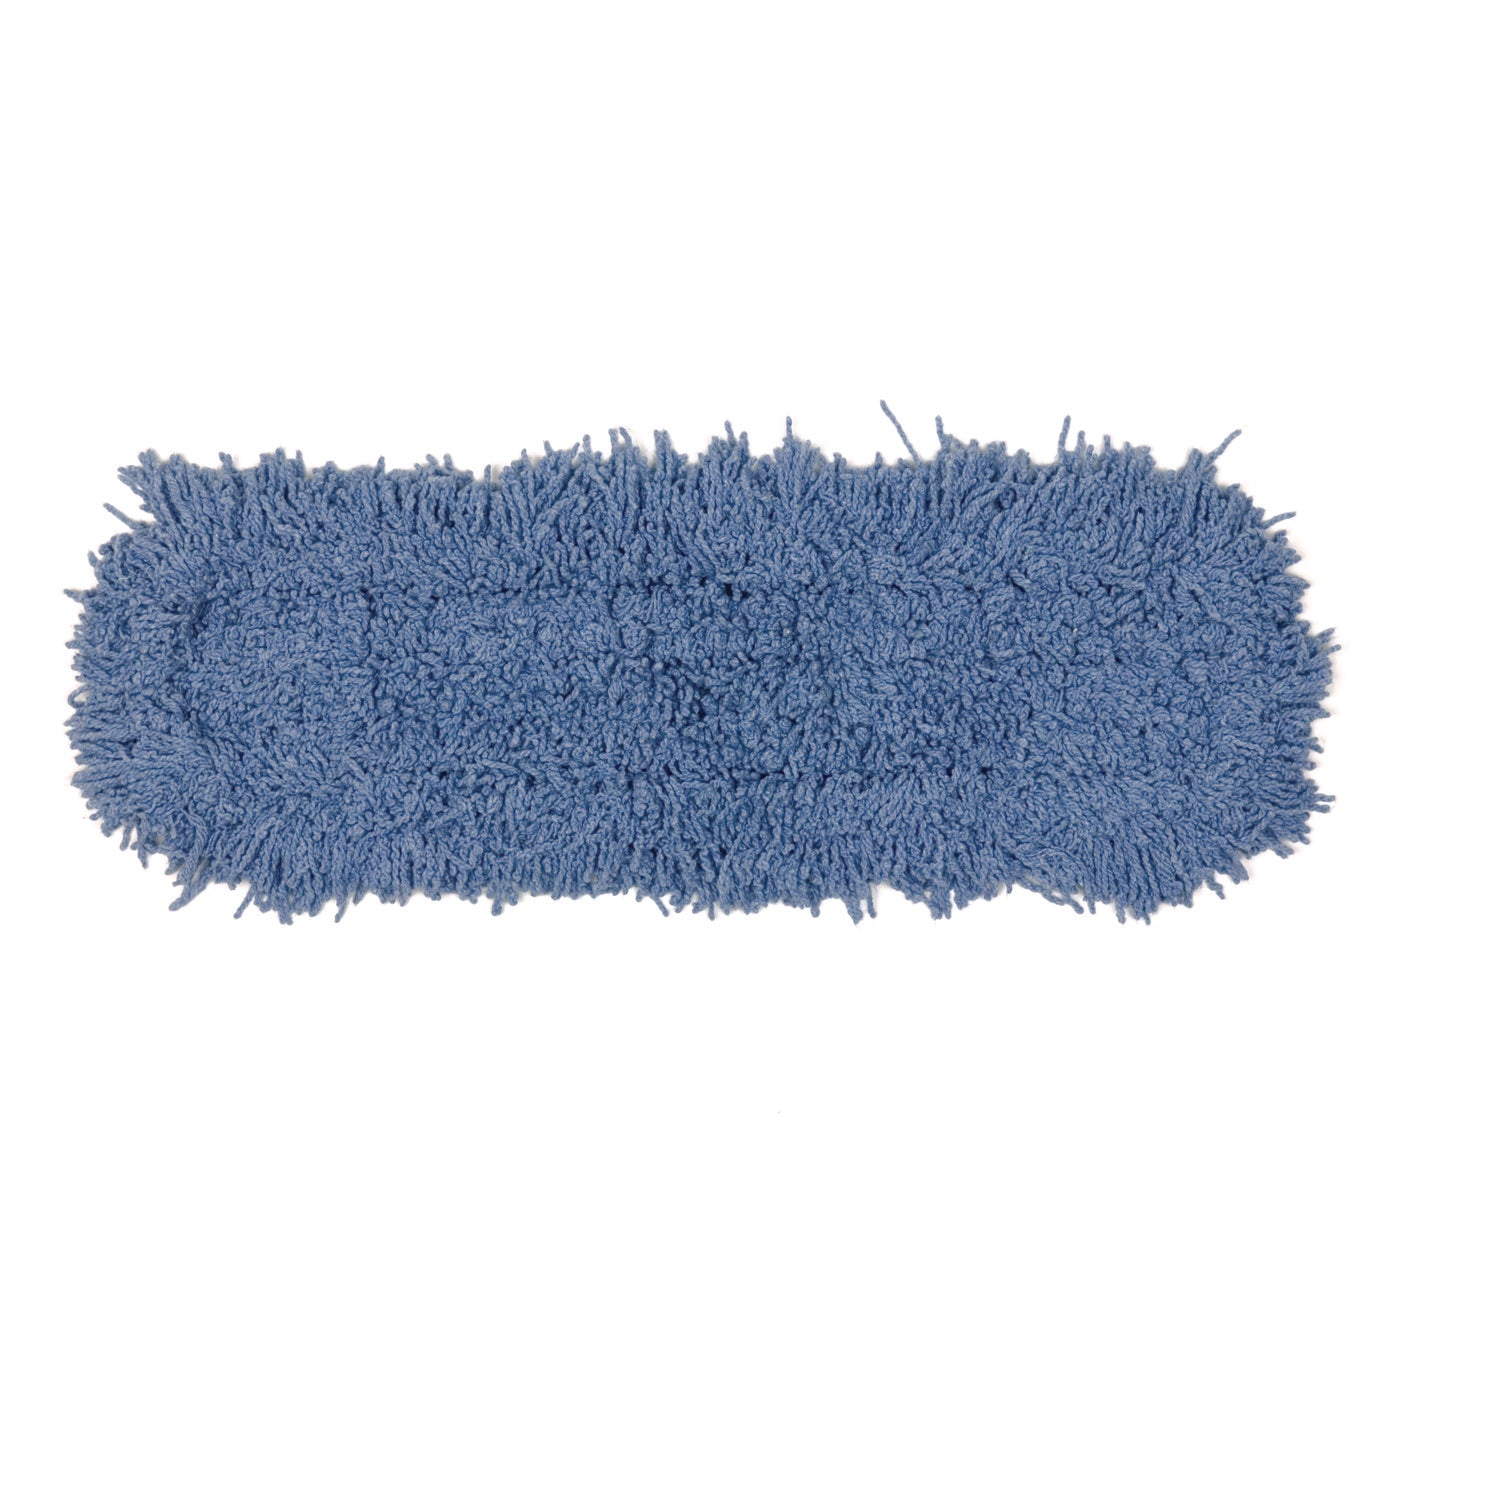 Twisted Loop Blend Dust Mop, Polyester Yarn, 48", Blue, 12/Carton - 2